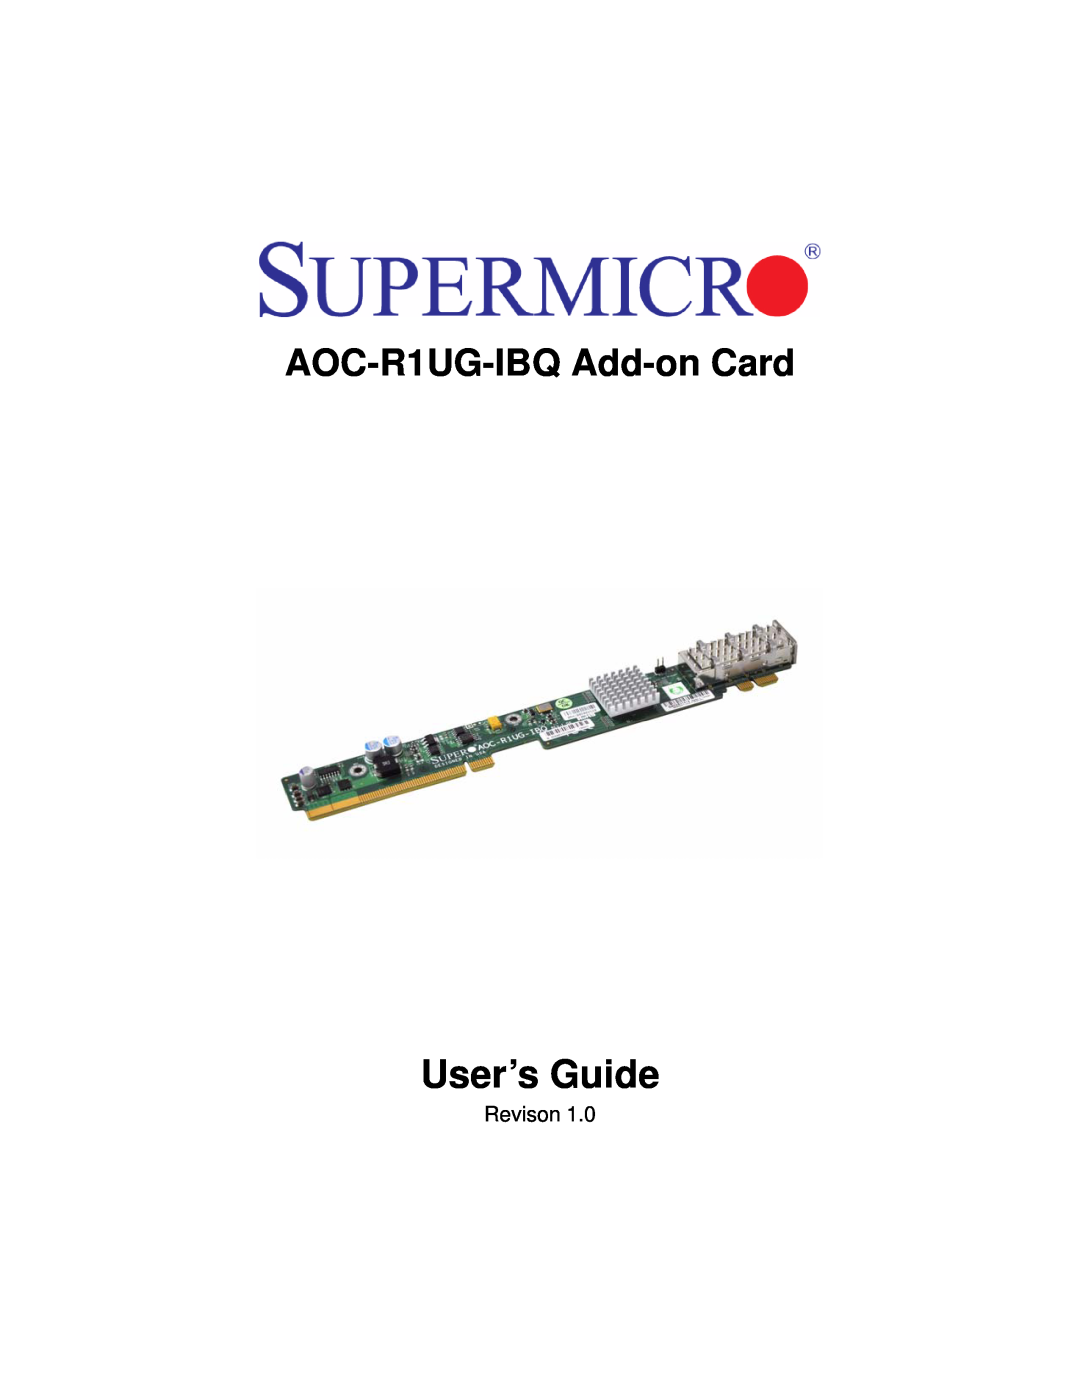 SUPER MICRO Computer manual User’s Guide, AOC-R1UG-IBQ Add-on Card, Revison 